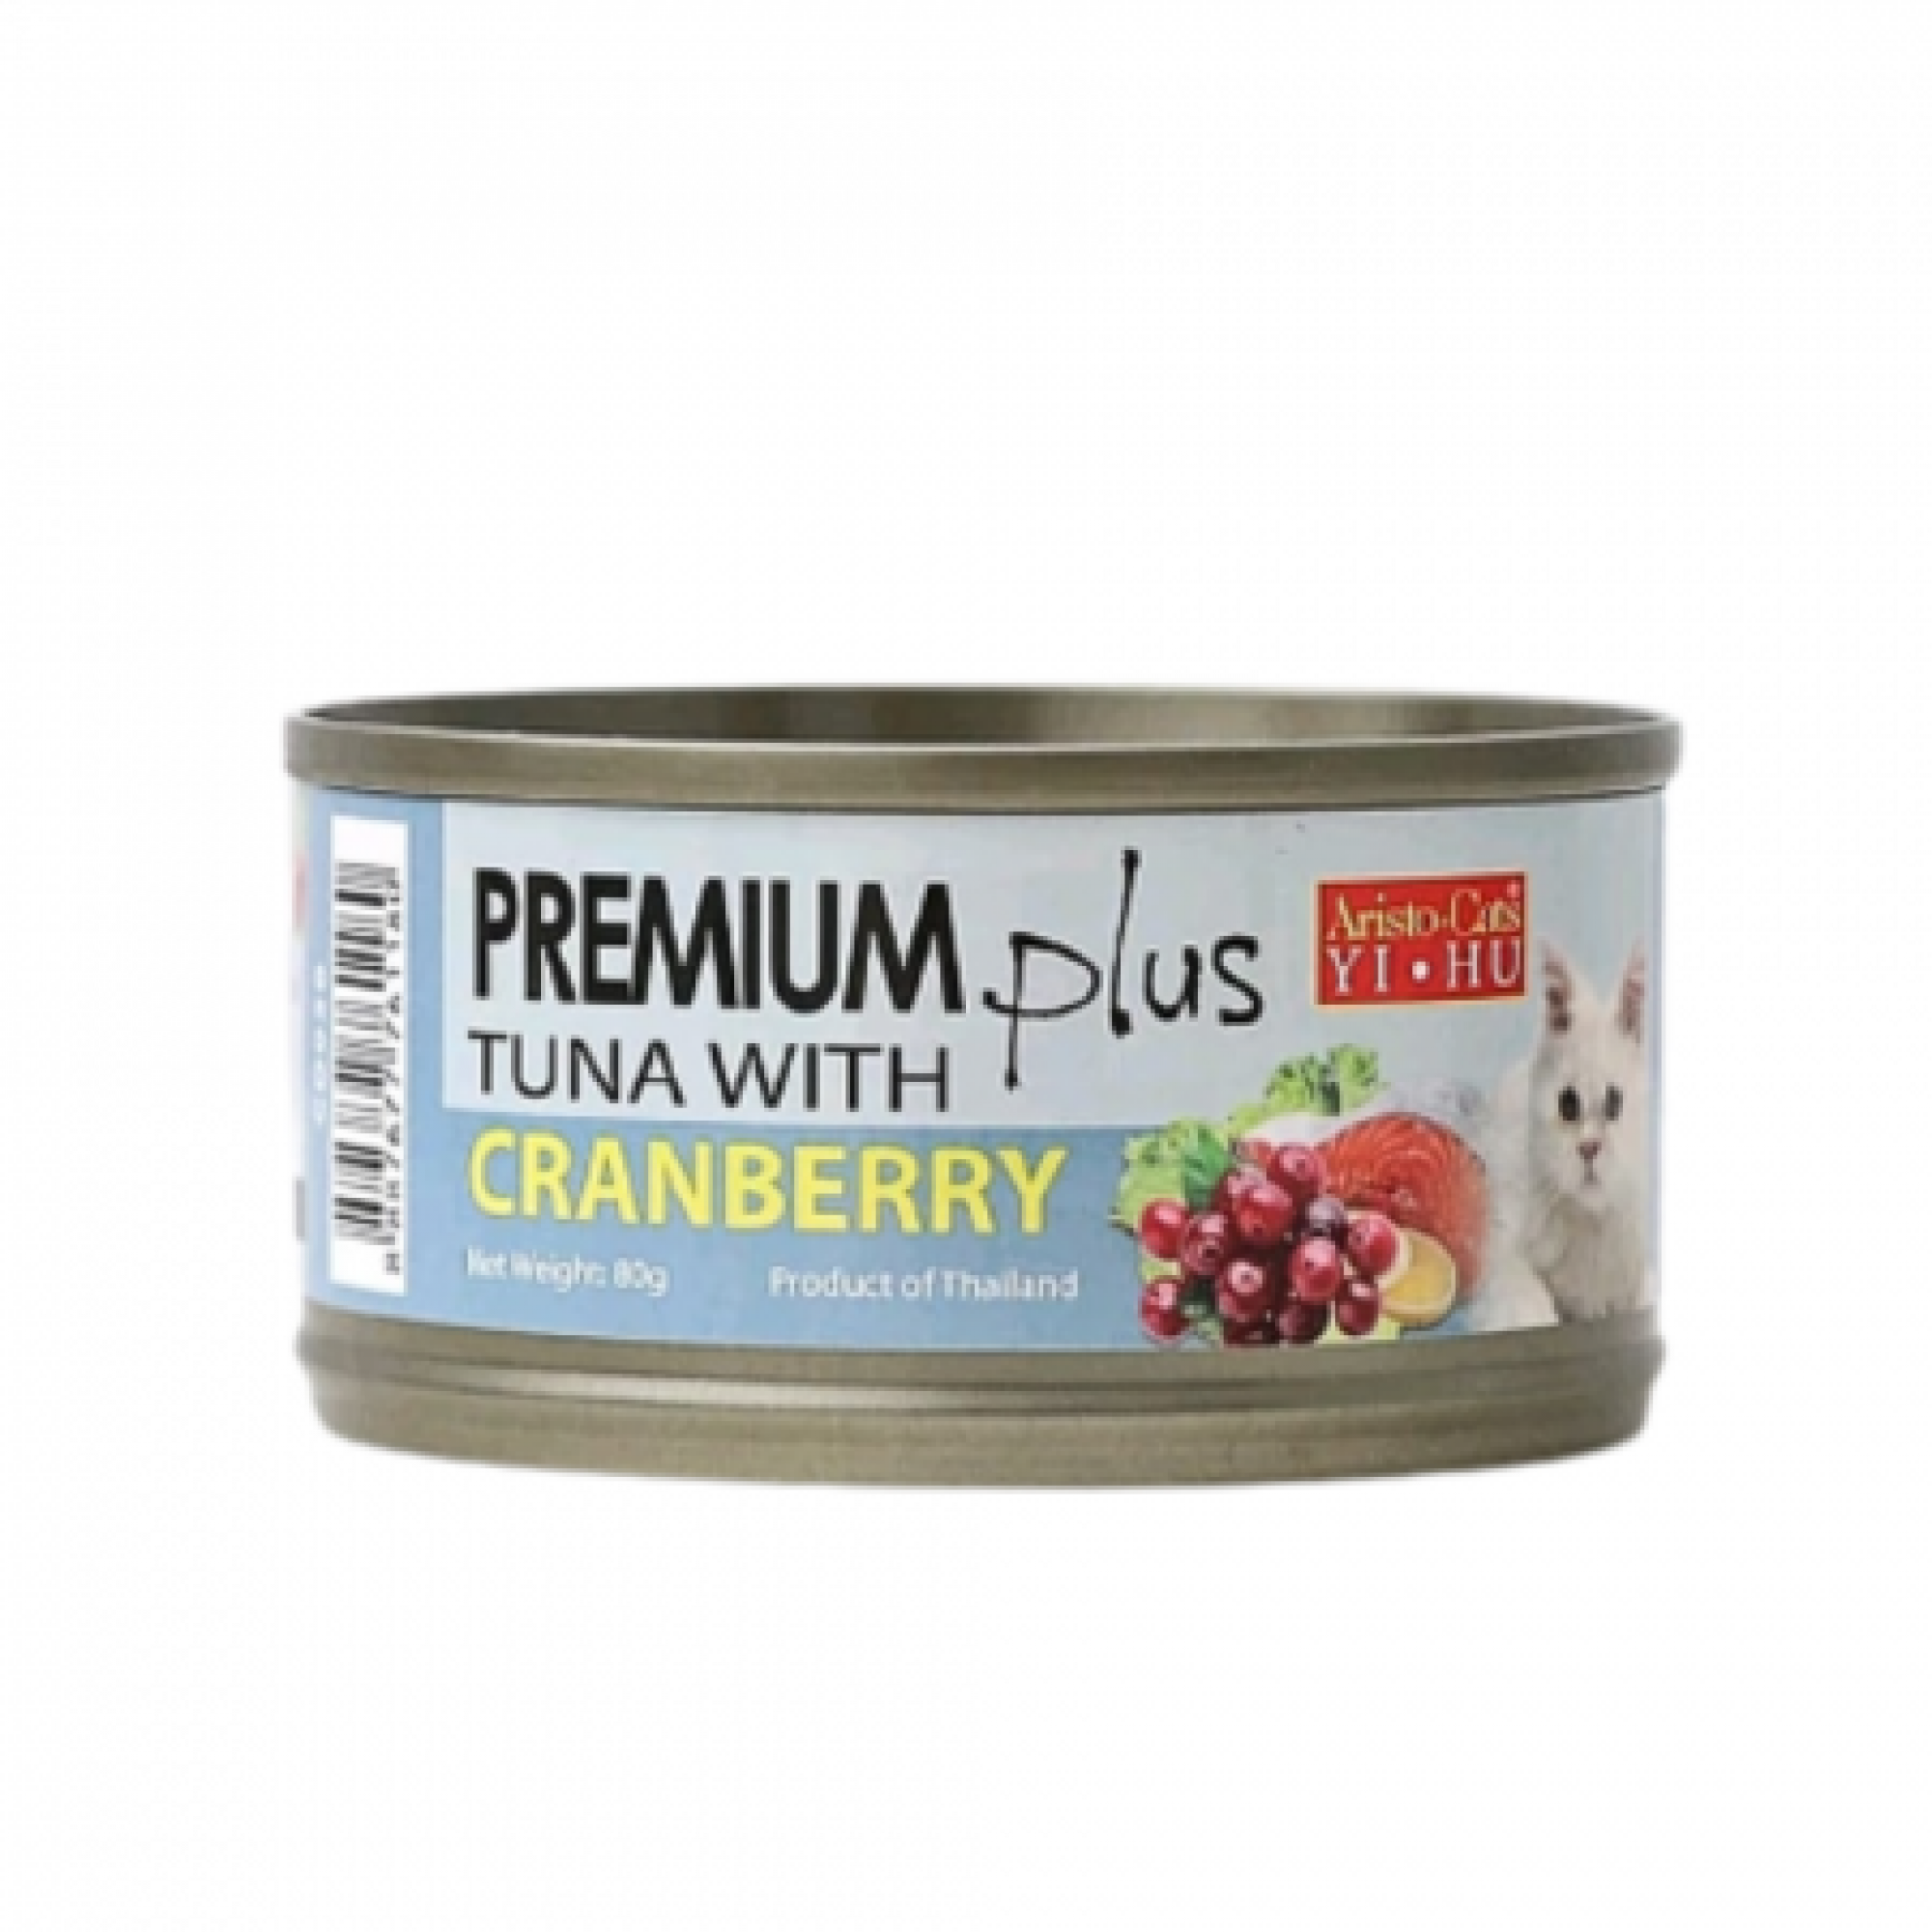 Aristo-Cats - Premium Plus - Tuna with Cranberry 80g